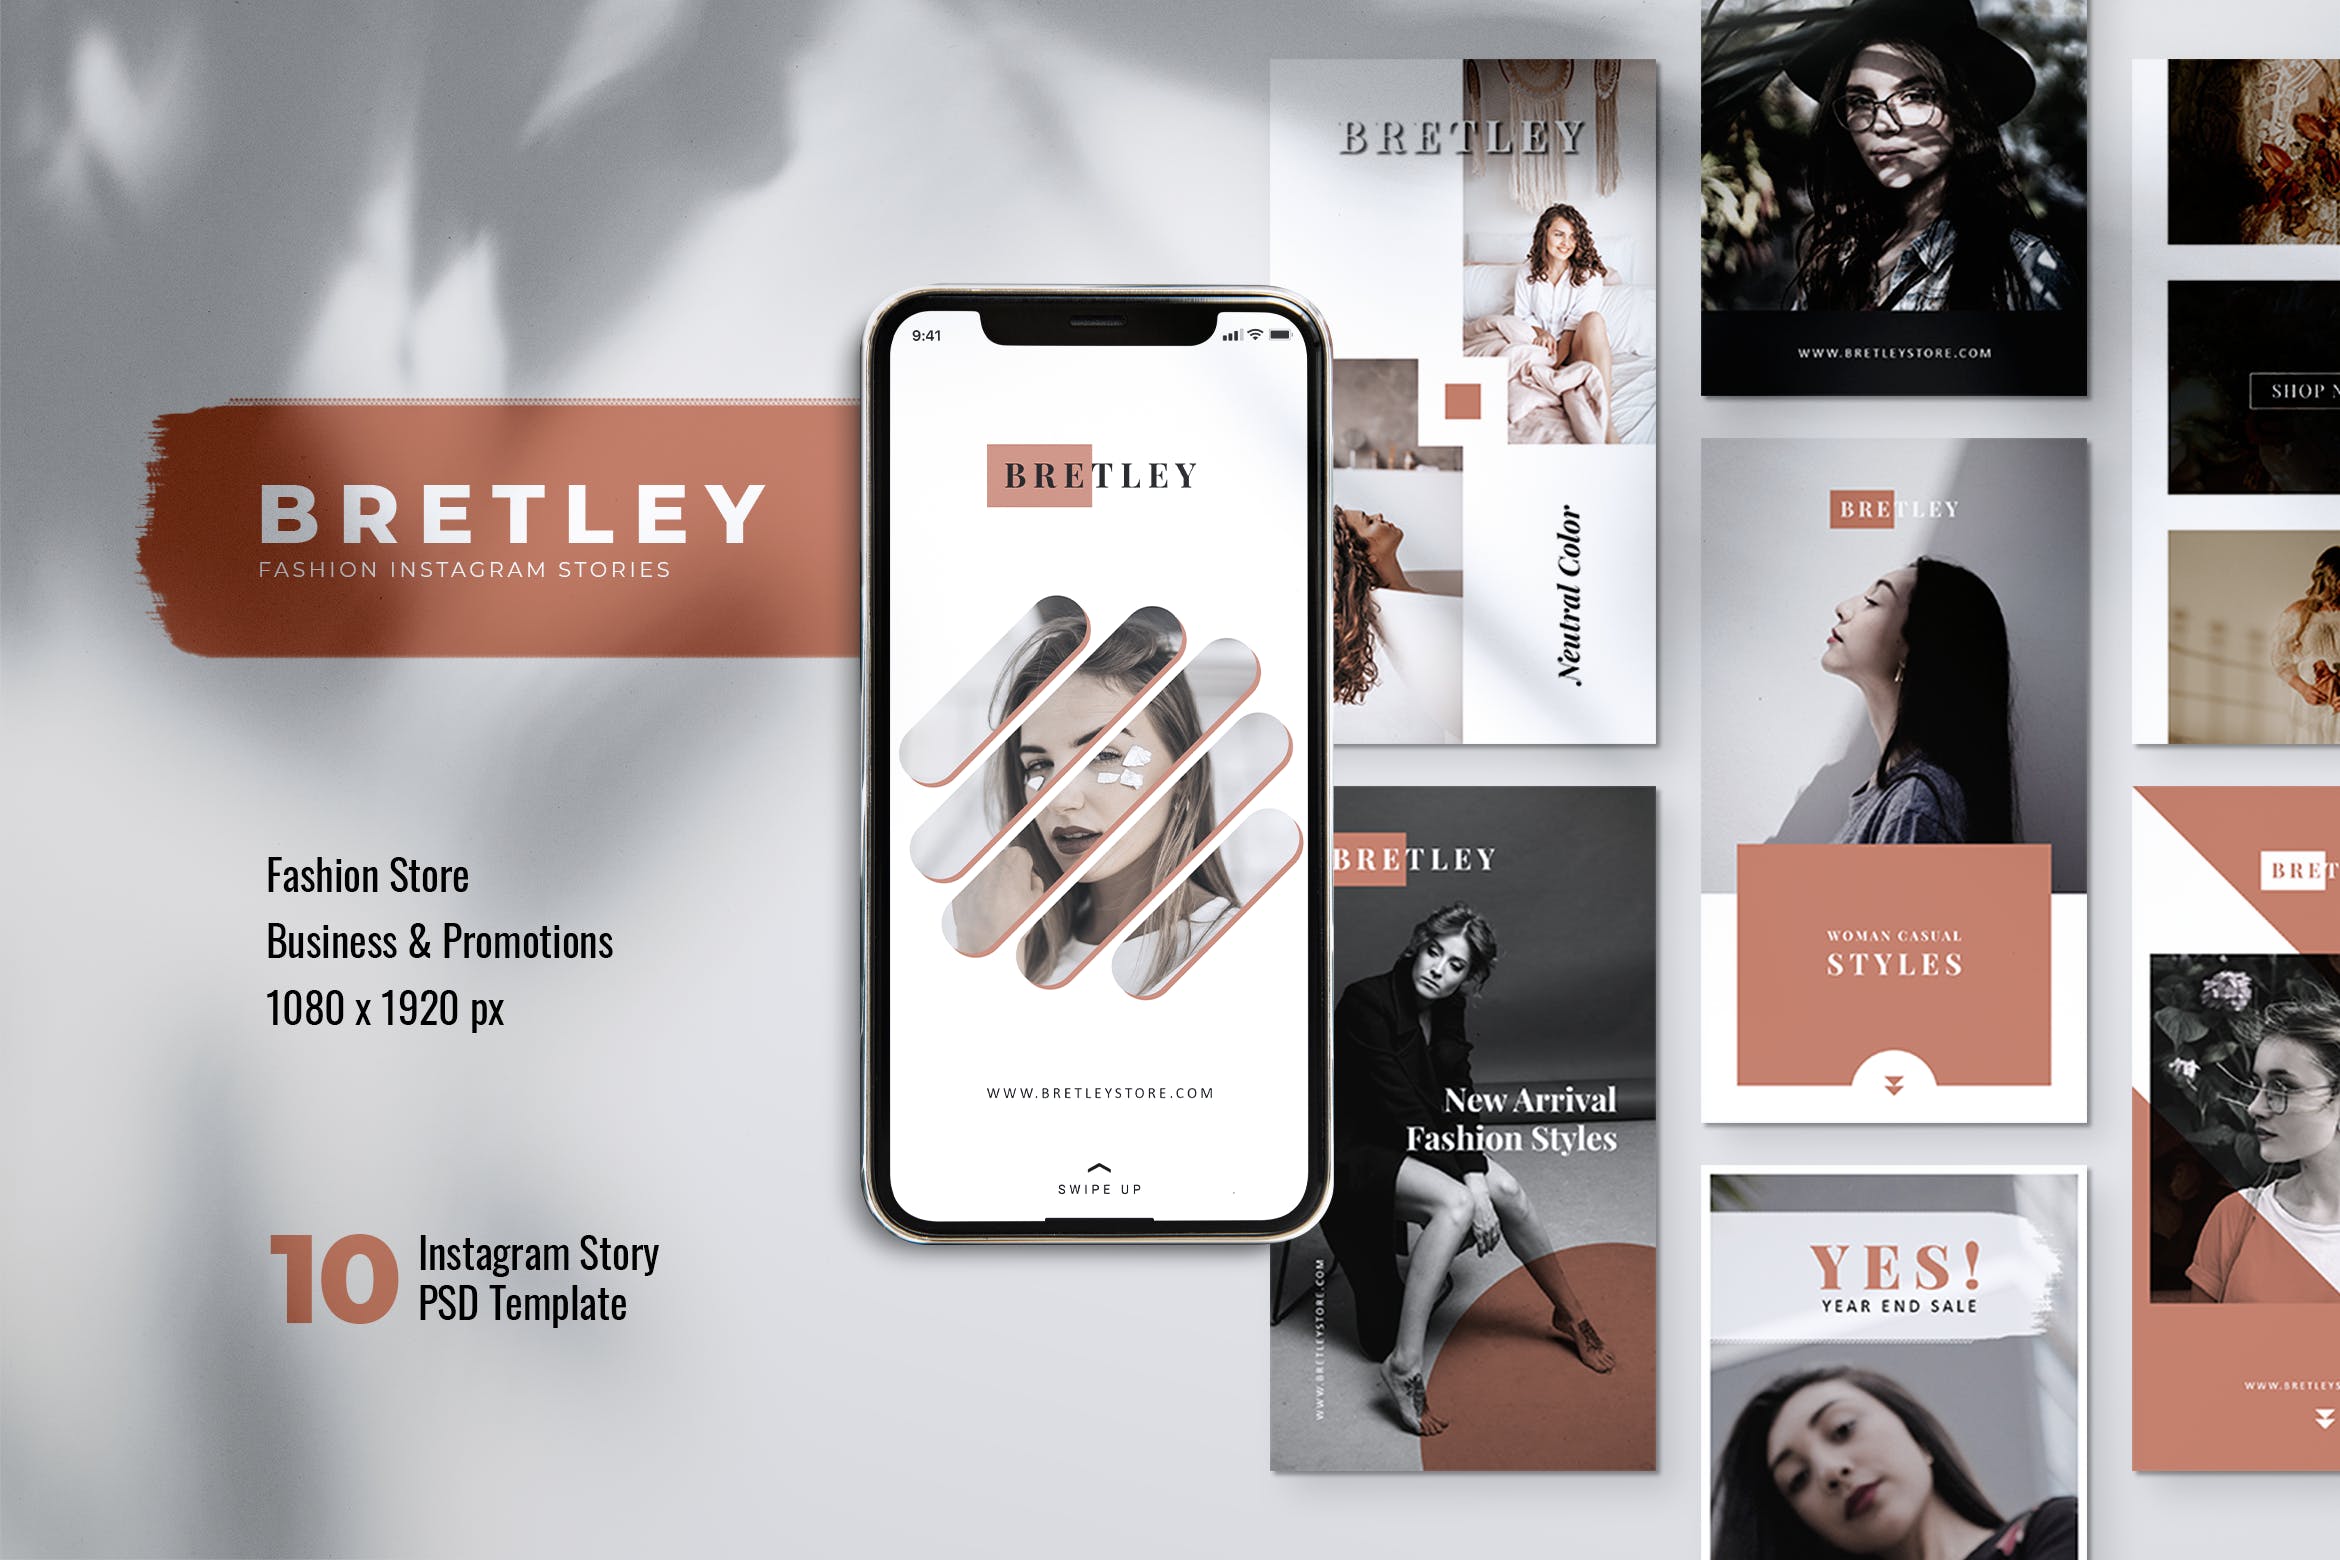 10款Instagram社交平台品牌故事设计模板16图库精选 BRETLEY Fashion Store Instagram Stories插图